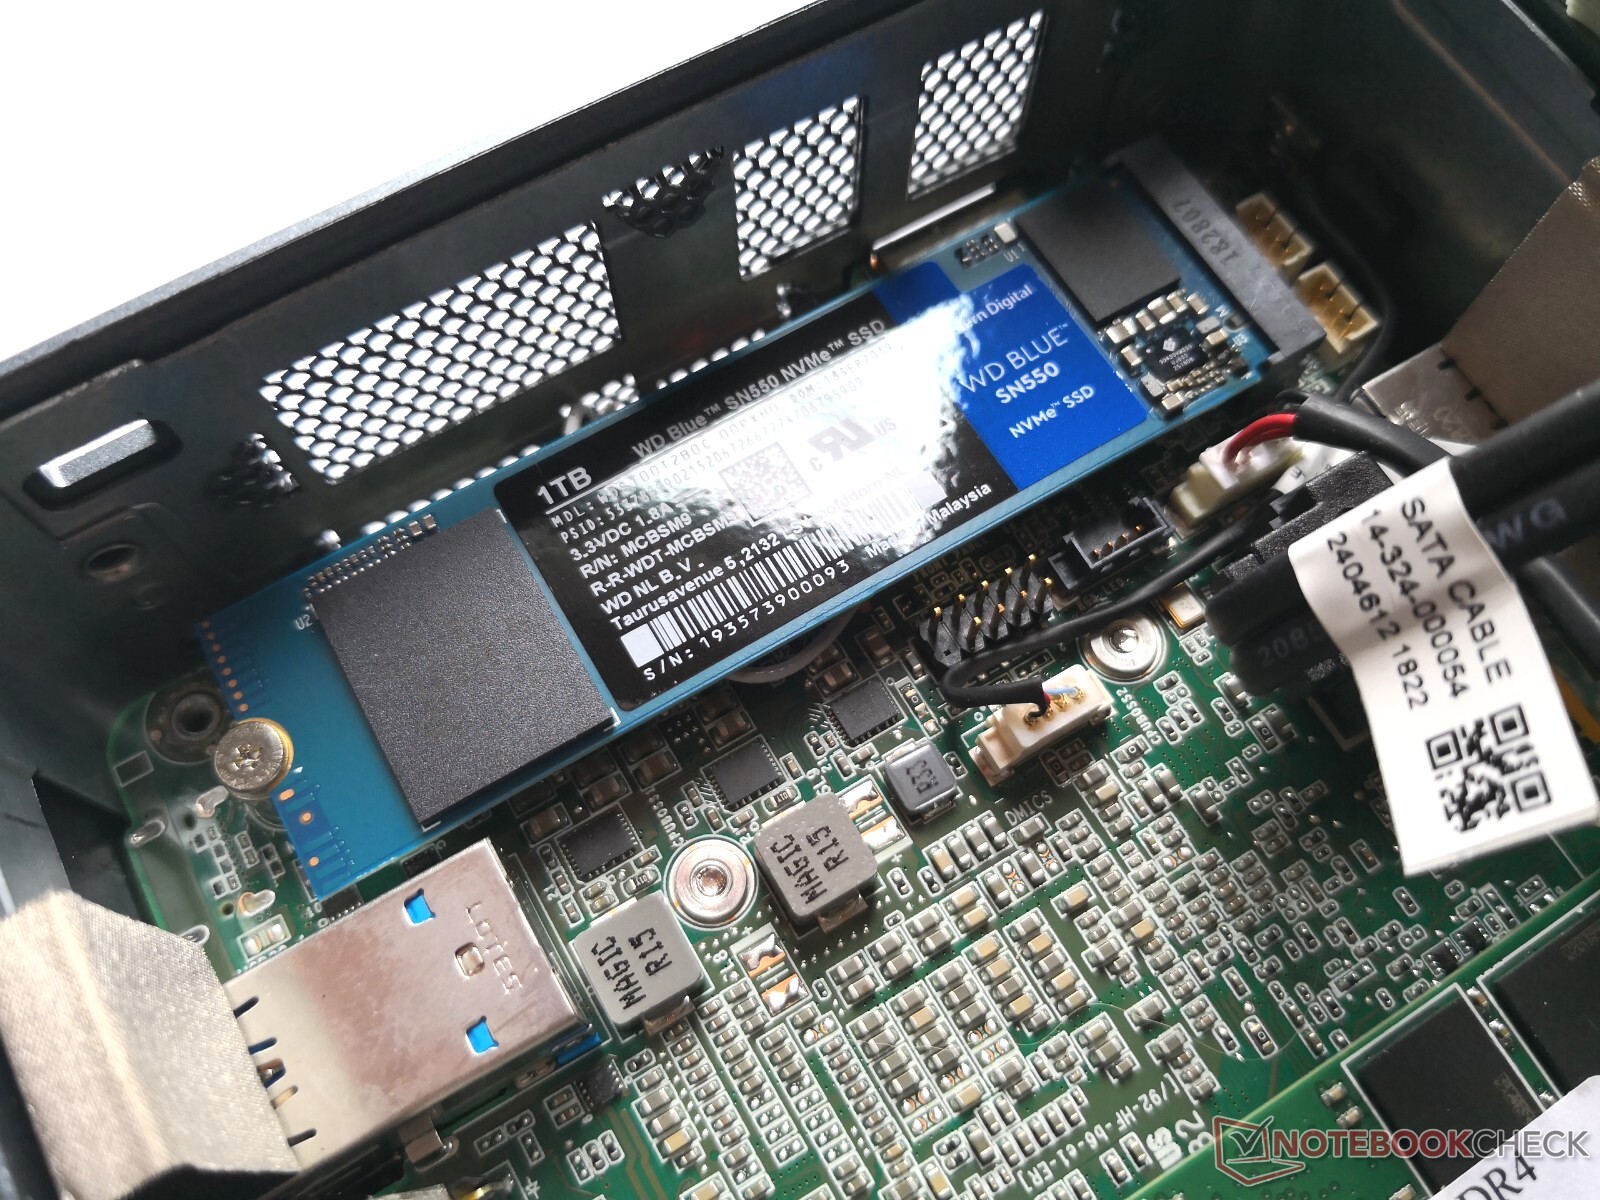 Western Blue SN550 NVMe 1 TB SSD - NotebookCheck.net Reviews